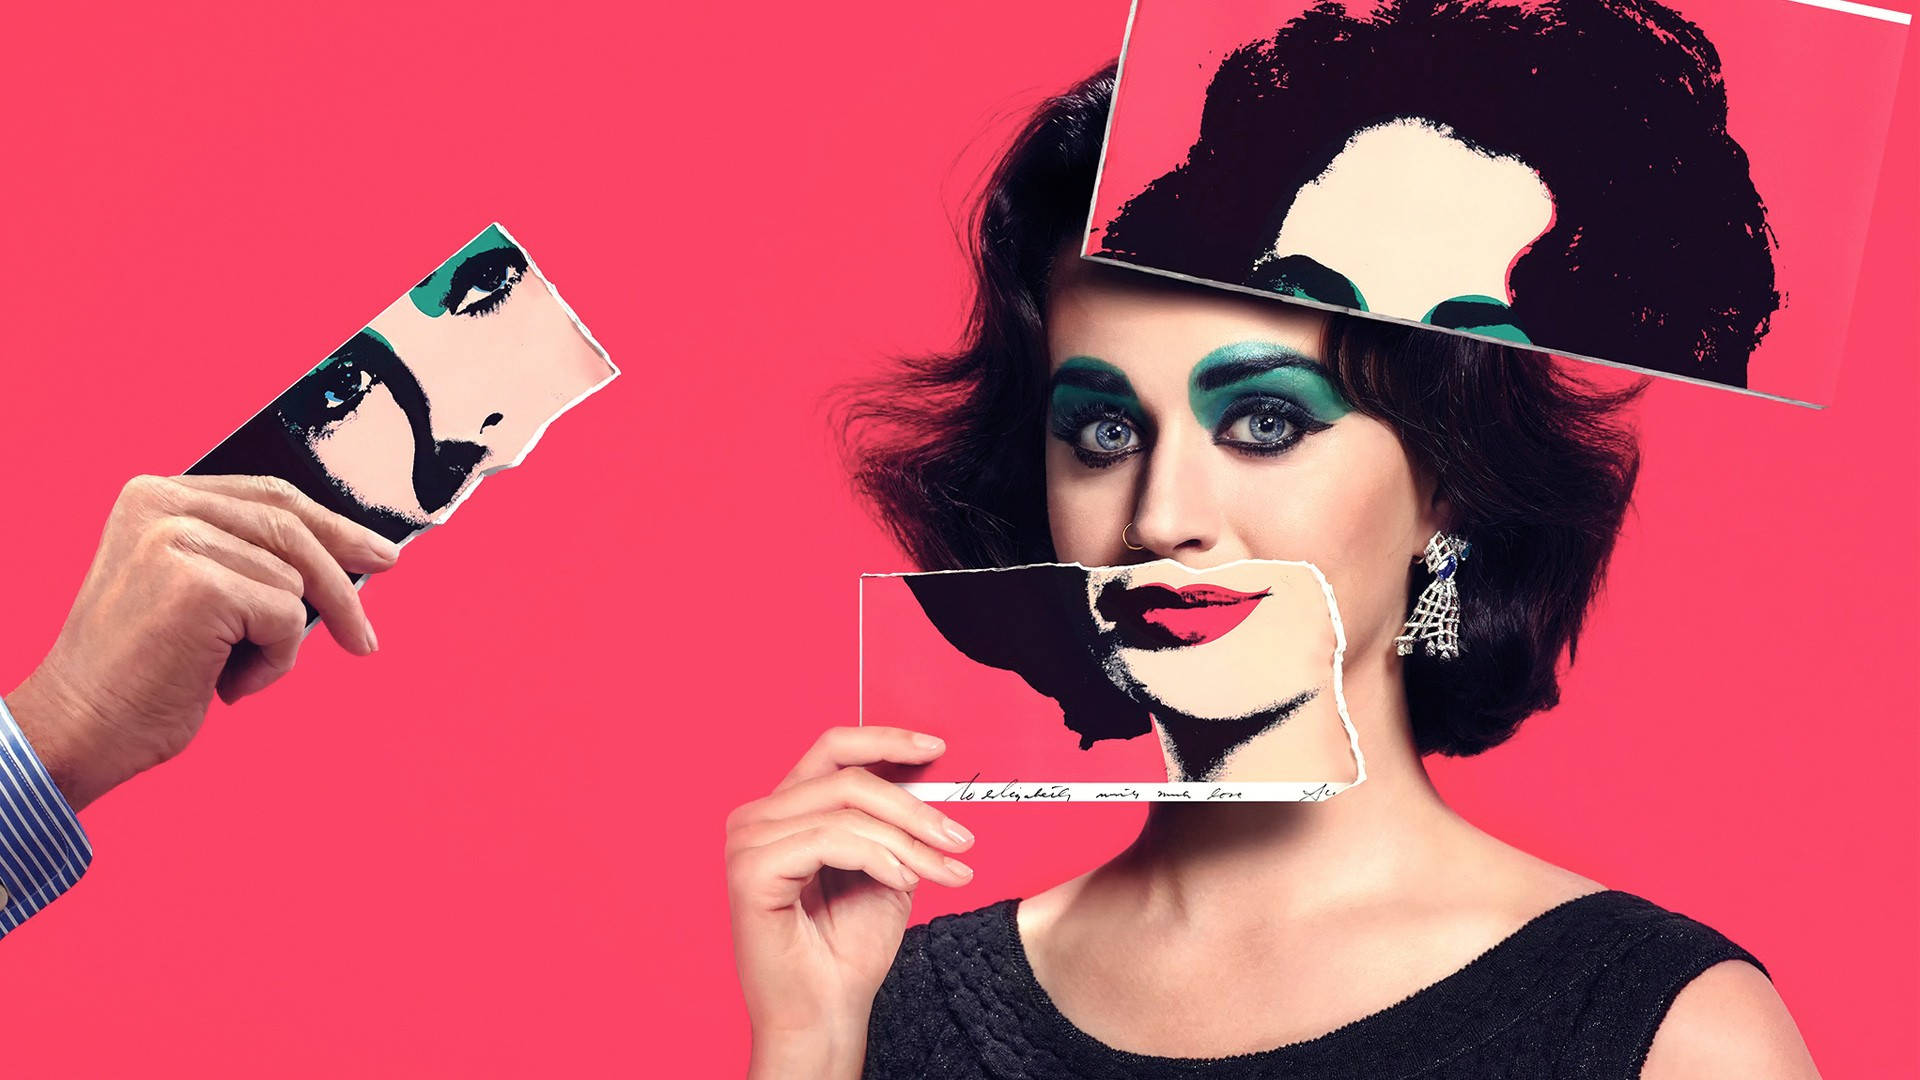 Image  Katy Perry in Pop Art Photoshoot Wallpaper